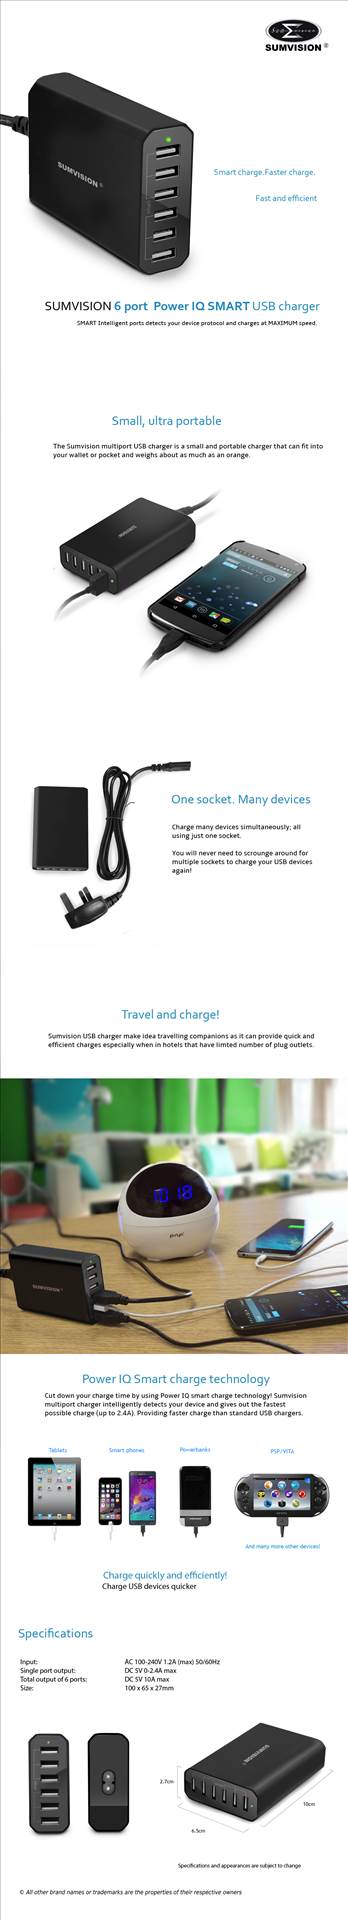 POWER-USB-CHARGER-6P- brochure.jpg  by steven